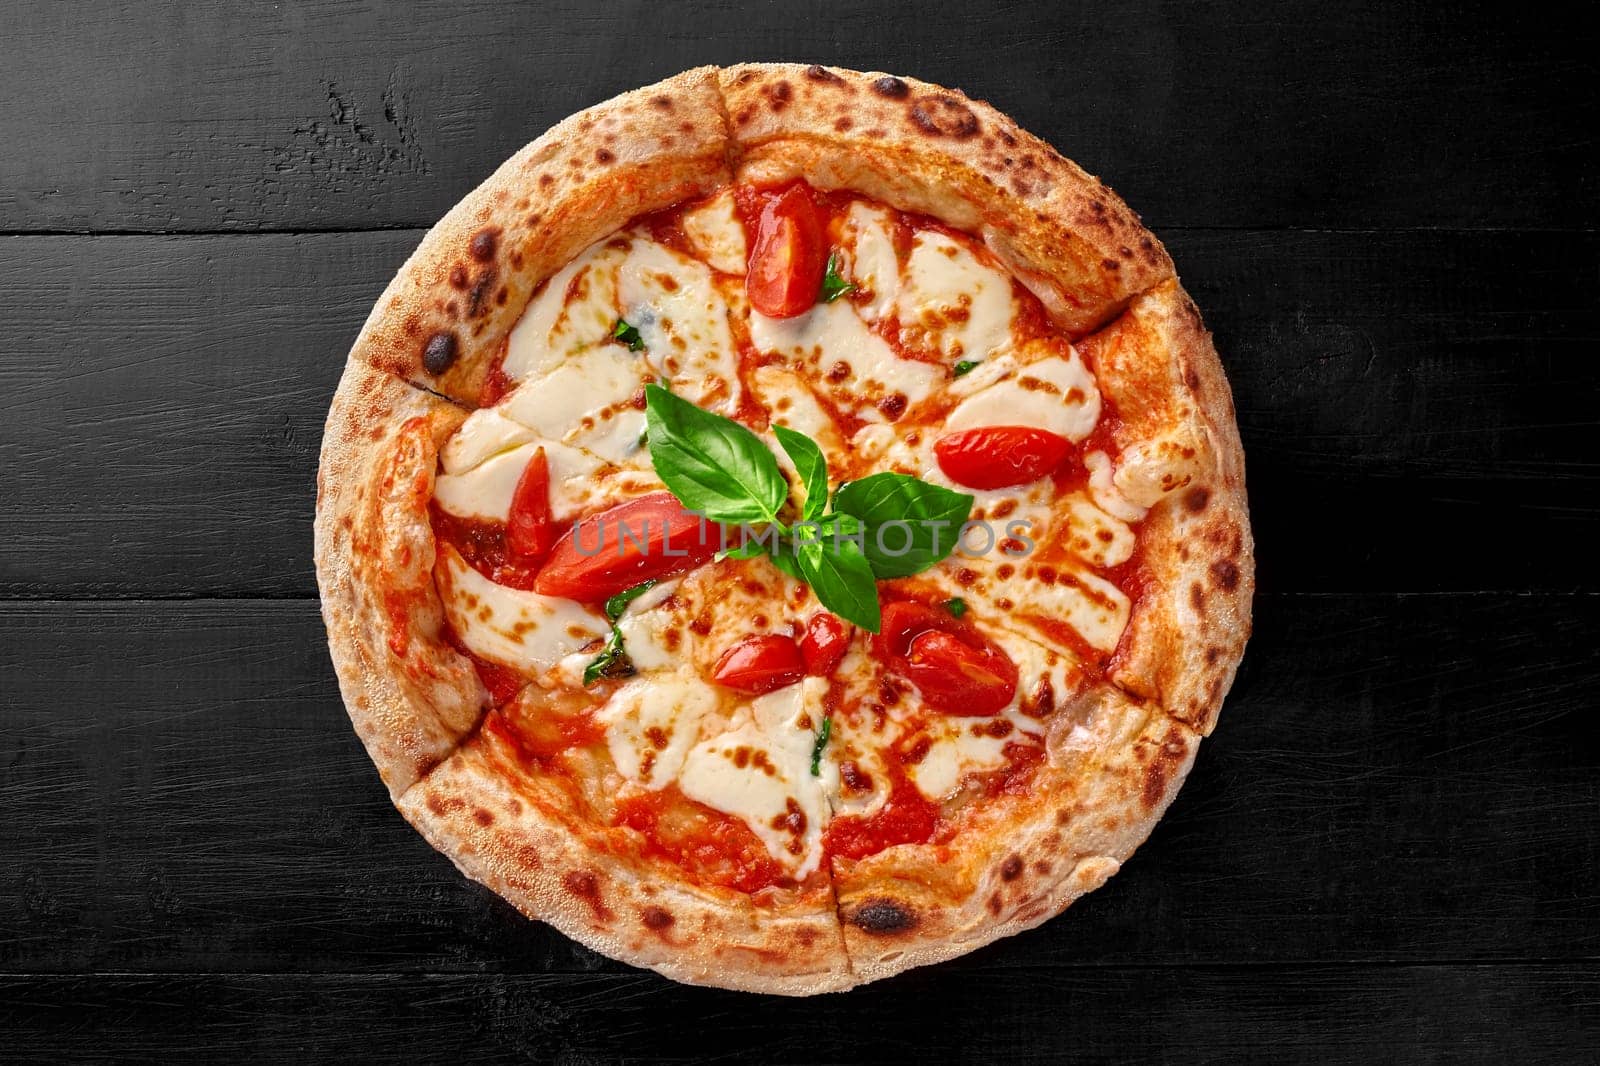 Italian pizza Margherita with tomatoes, mozzarella and fresh basil by nazarovsergey